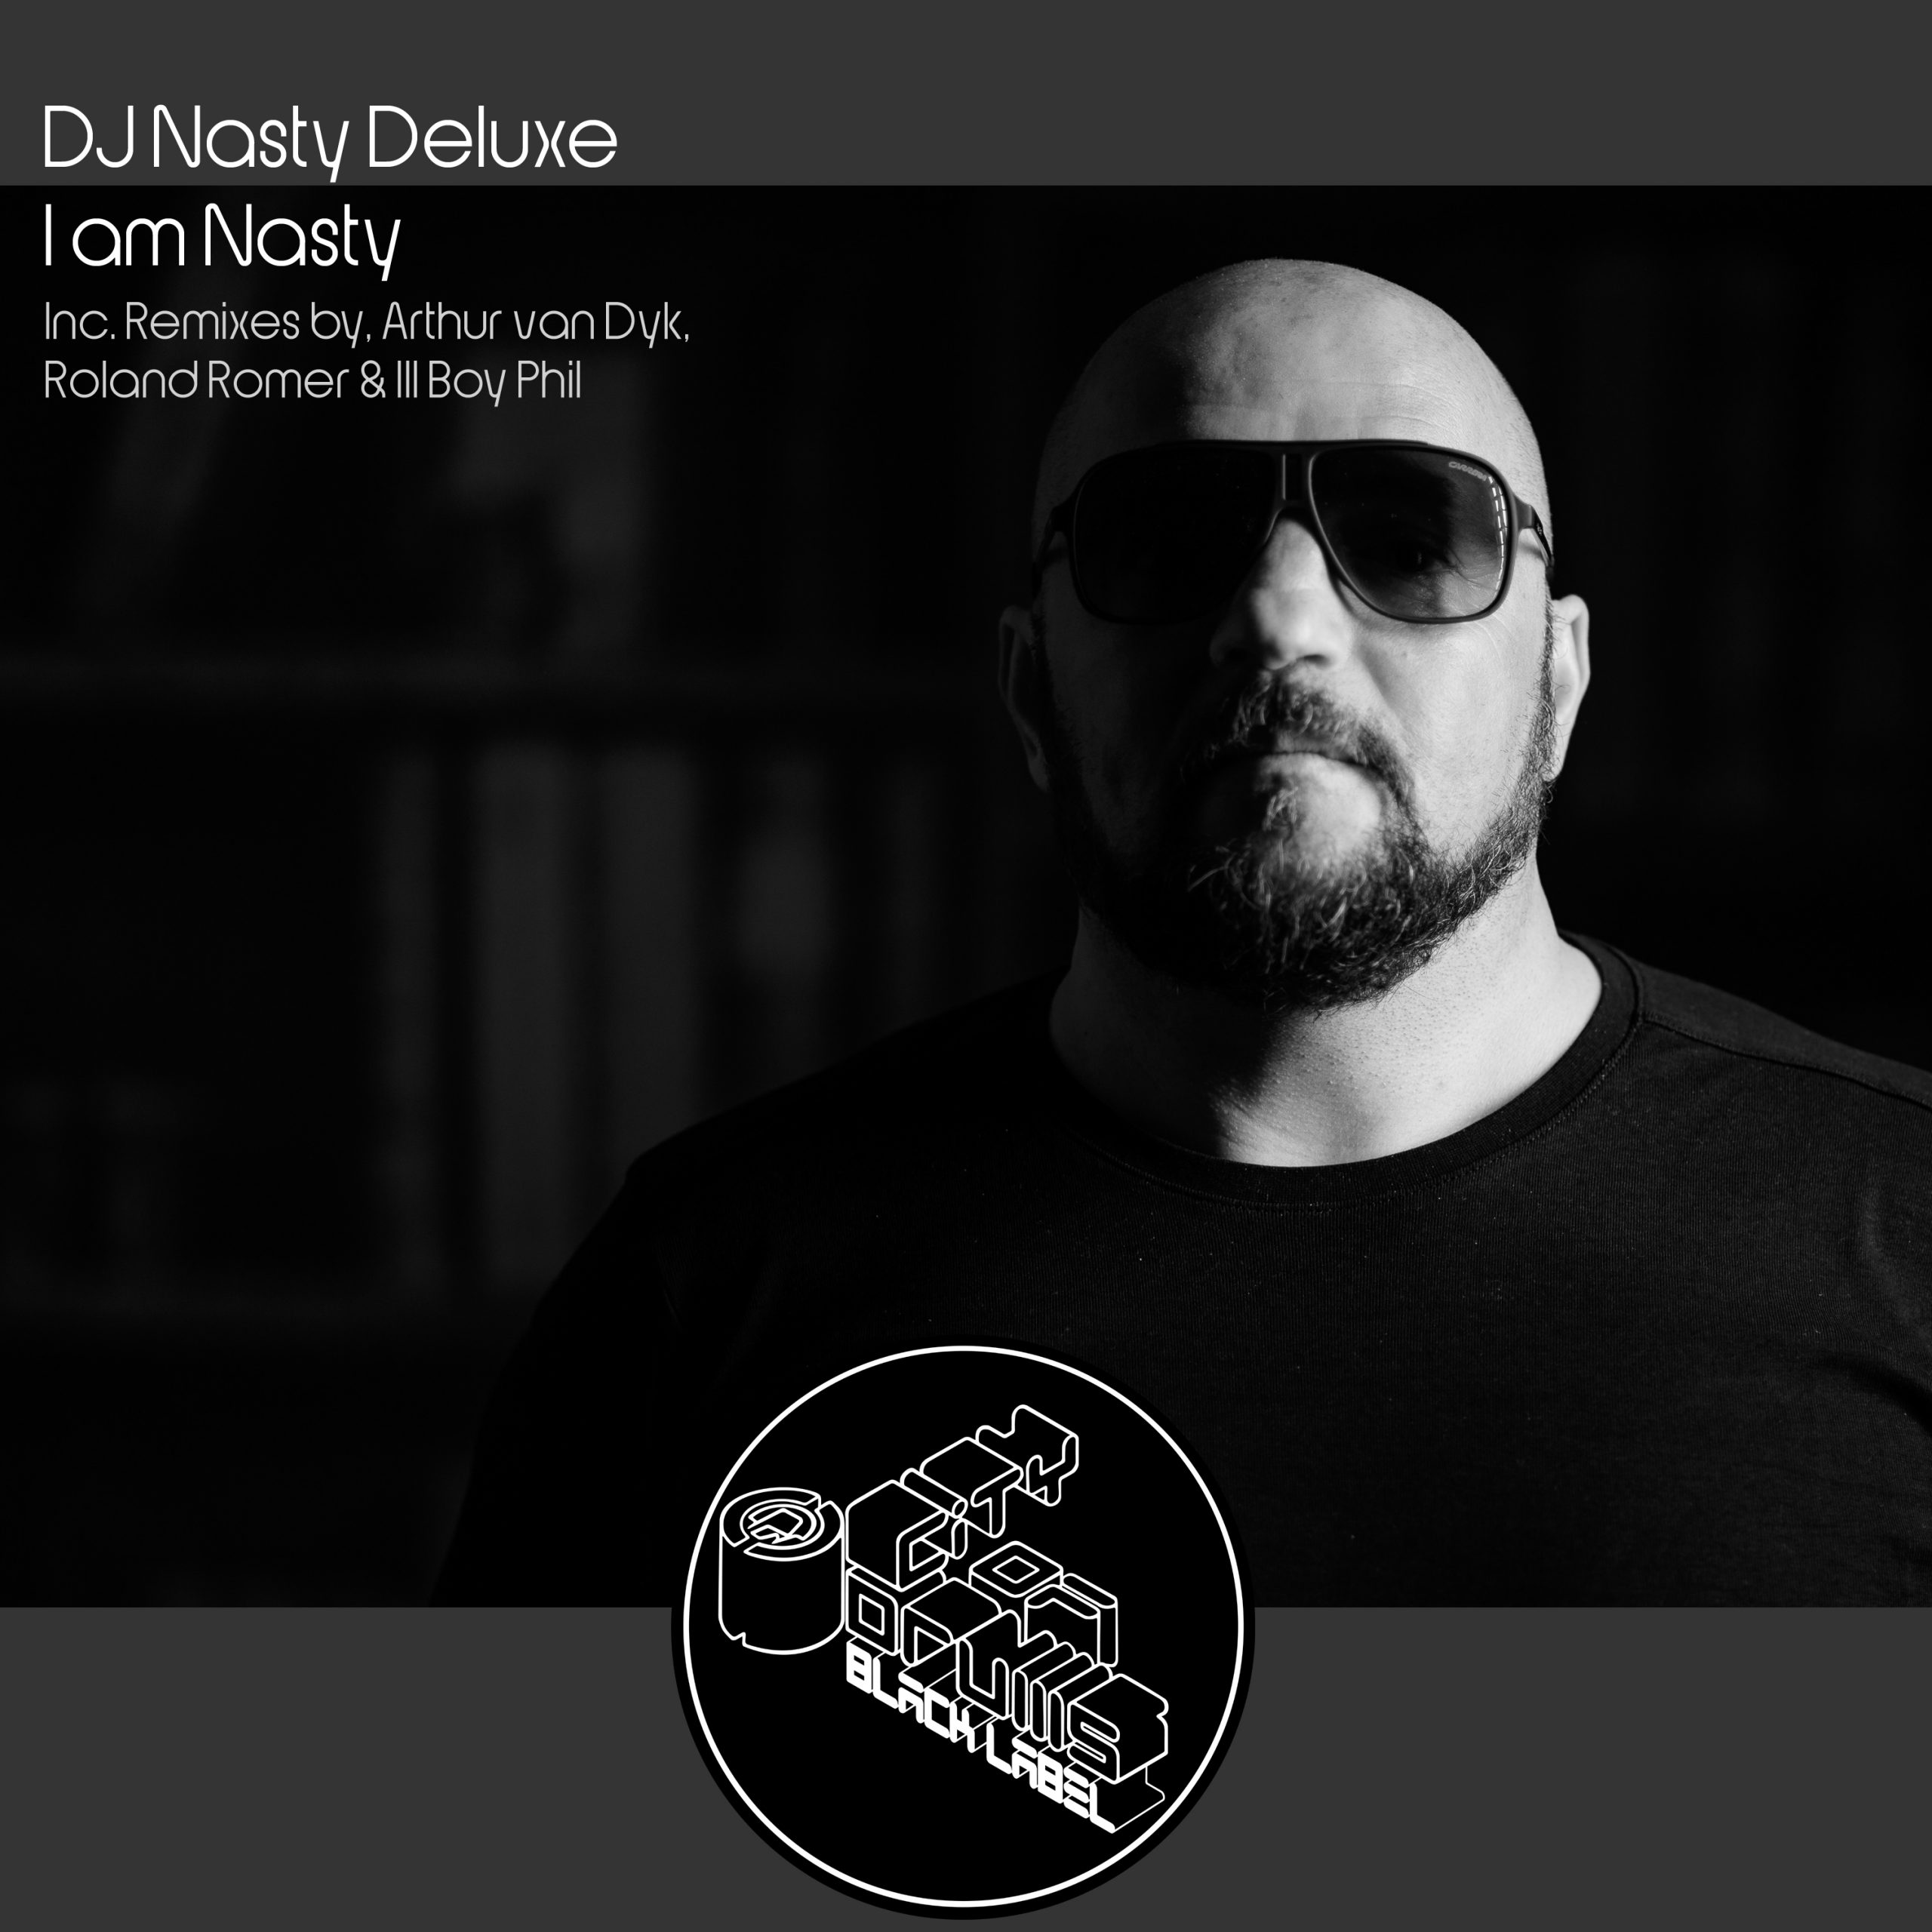 OUT NOW!!! I am Nasty von DJ Nasty Deluxe! 19